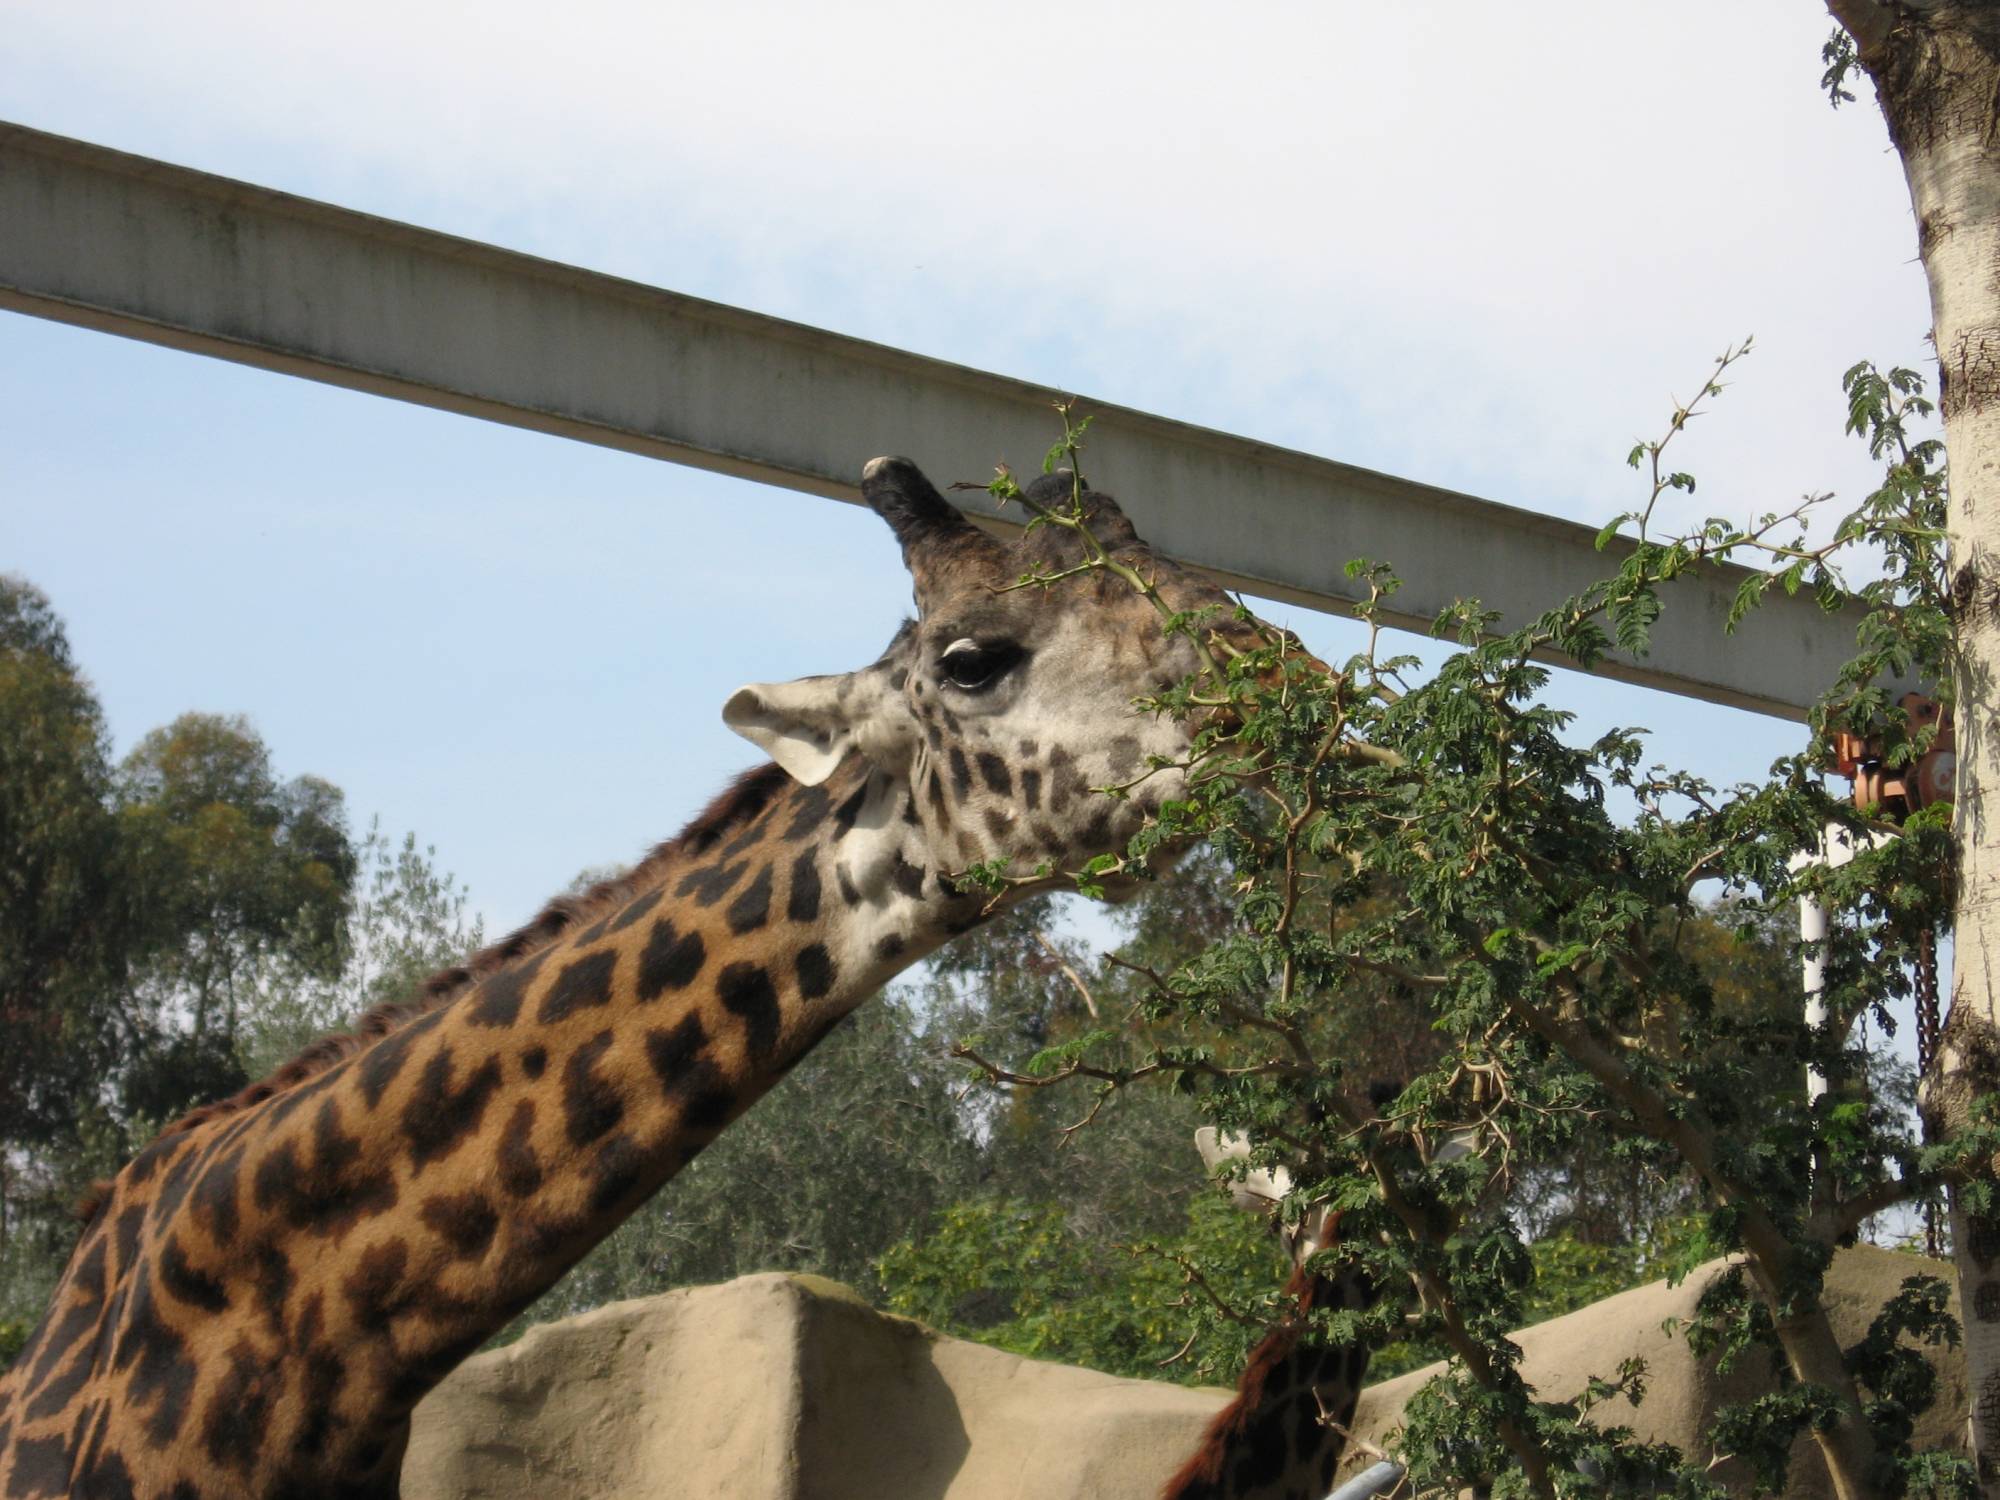 San Diego Zoo - Giraffe eating breakfast